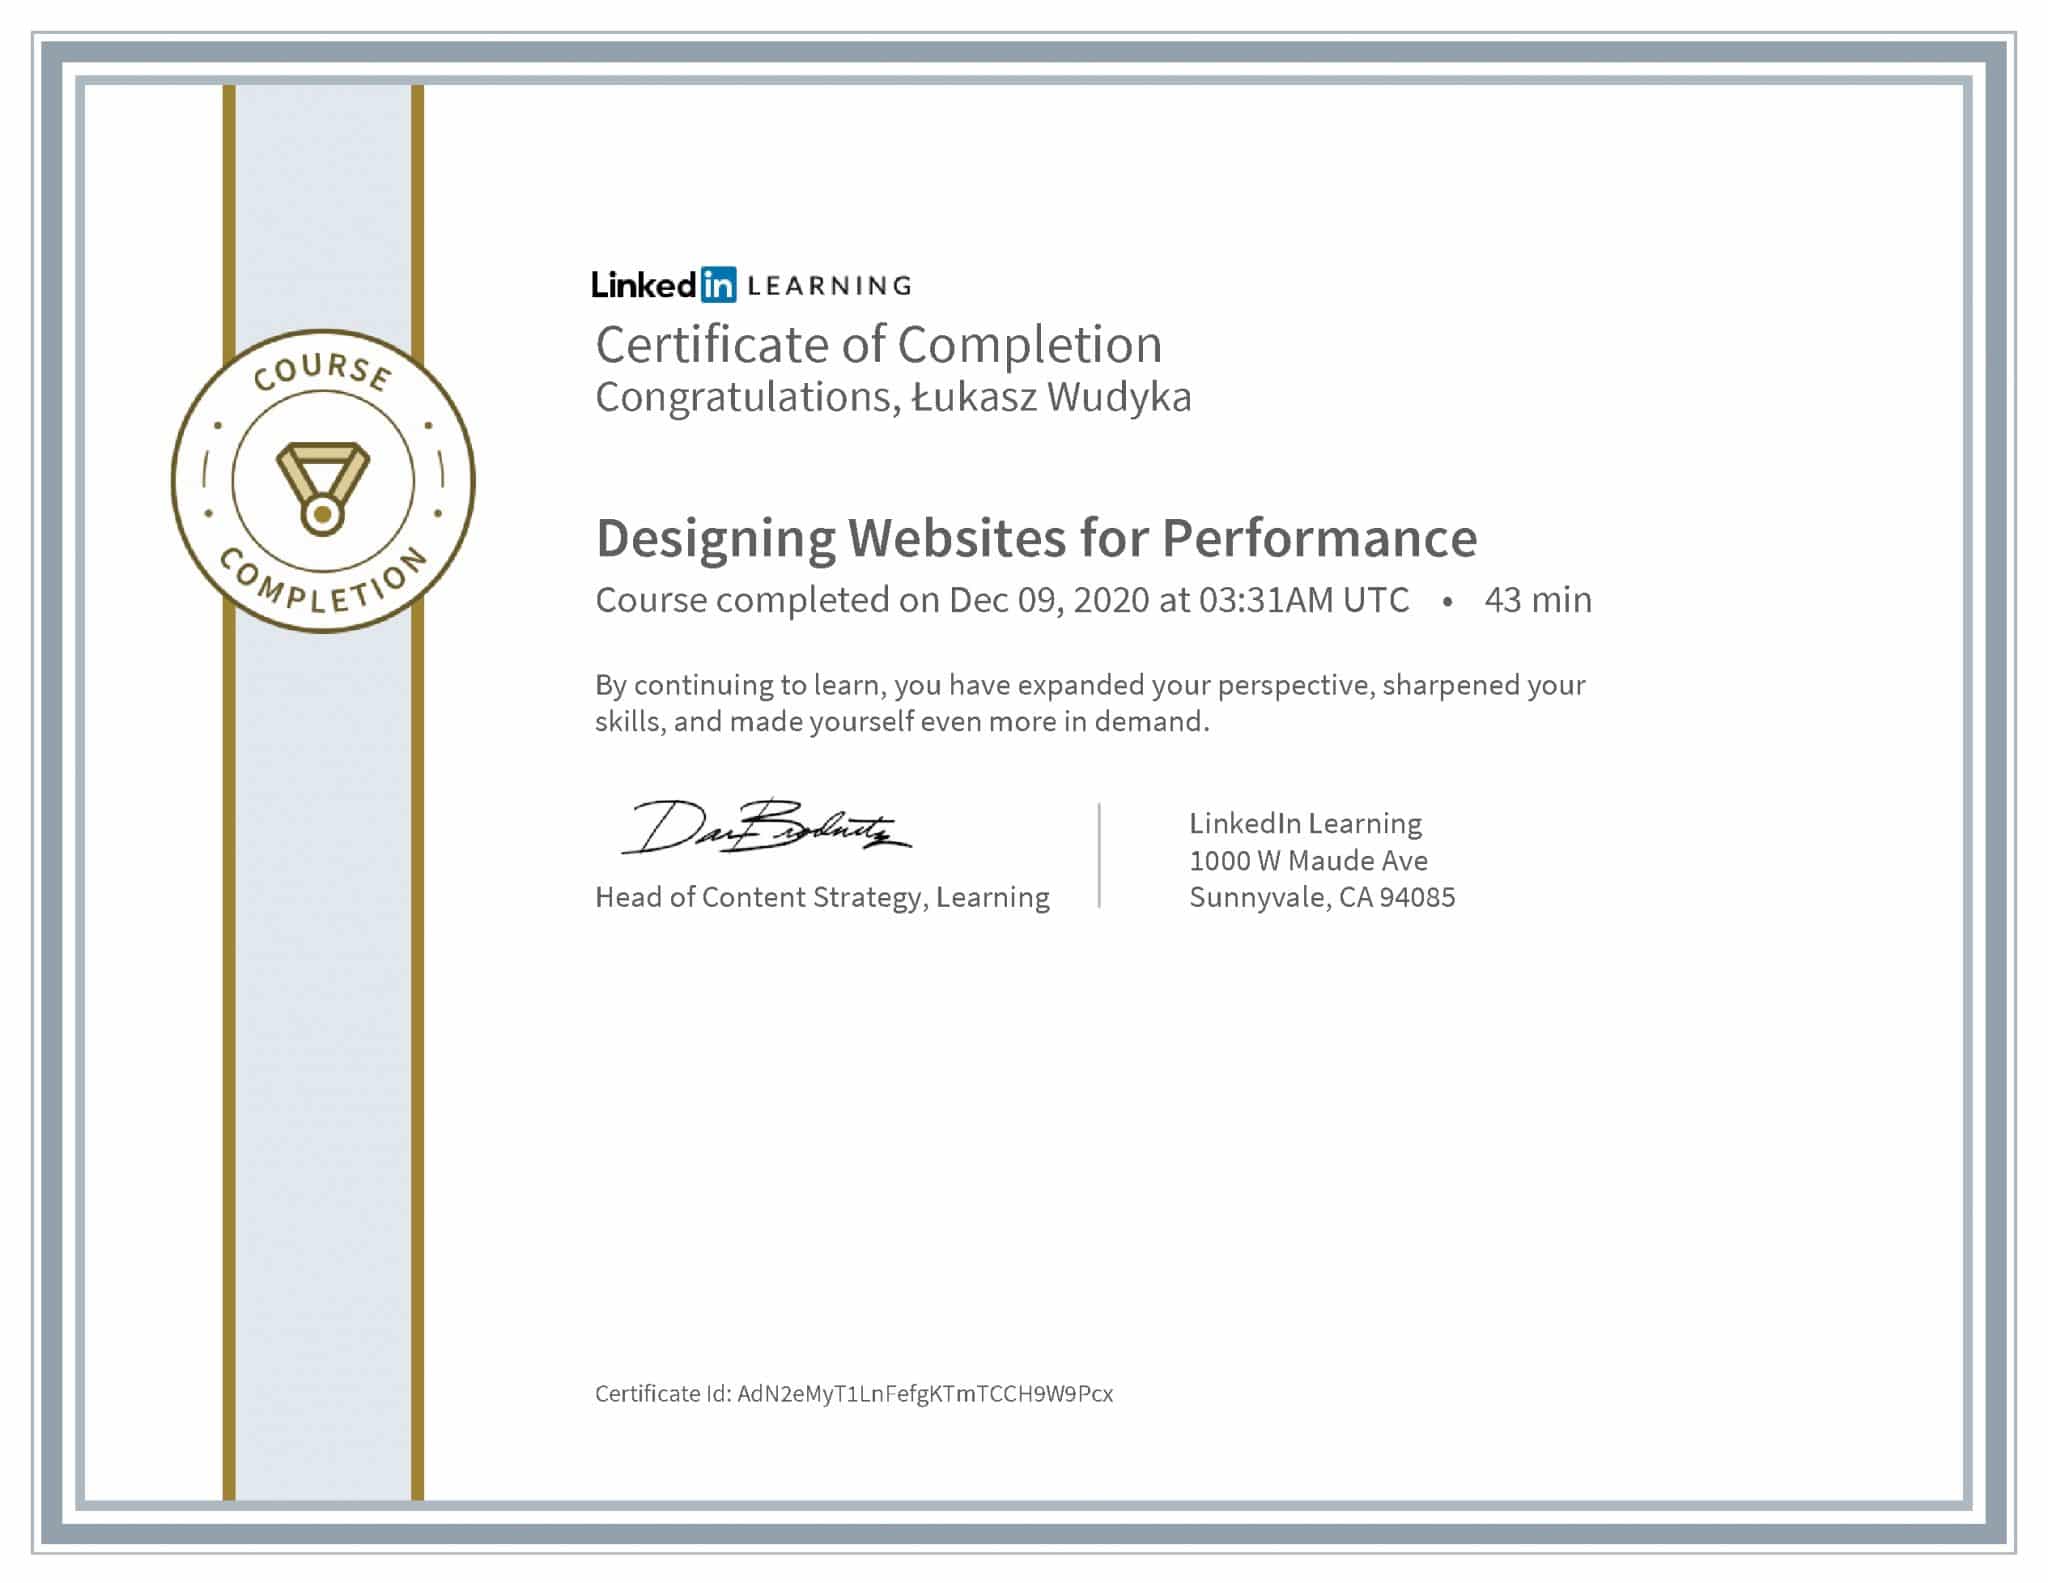 Łukasz Wudyka certyfikat LinkedIn Designing Websites for Performance